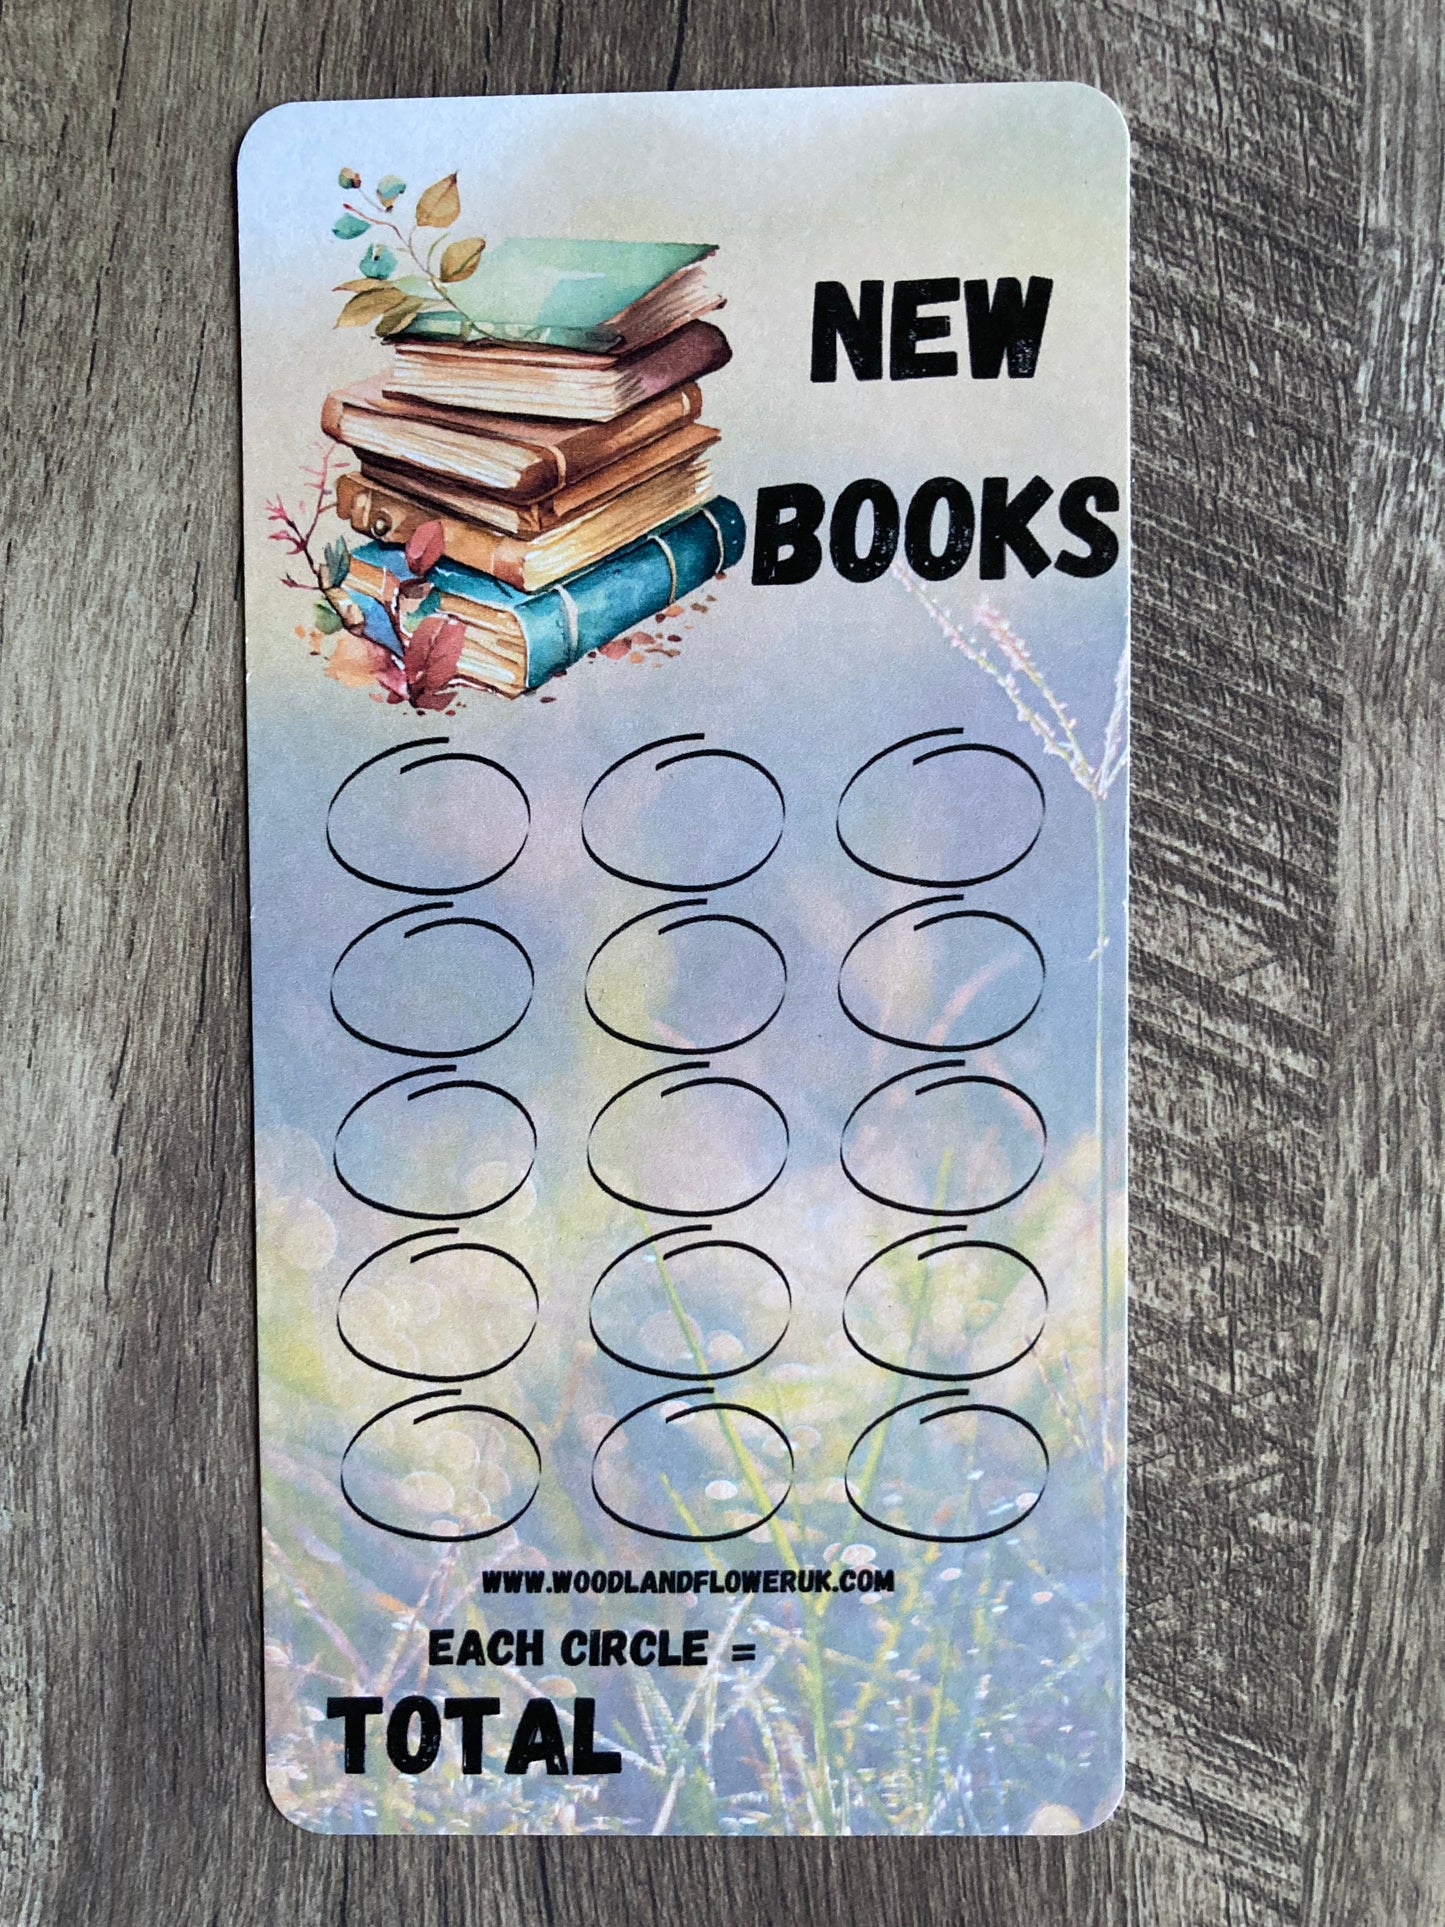 Saving challenge “new books”